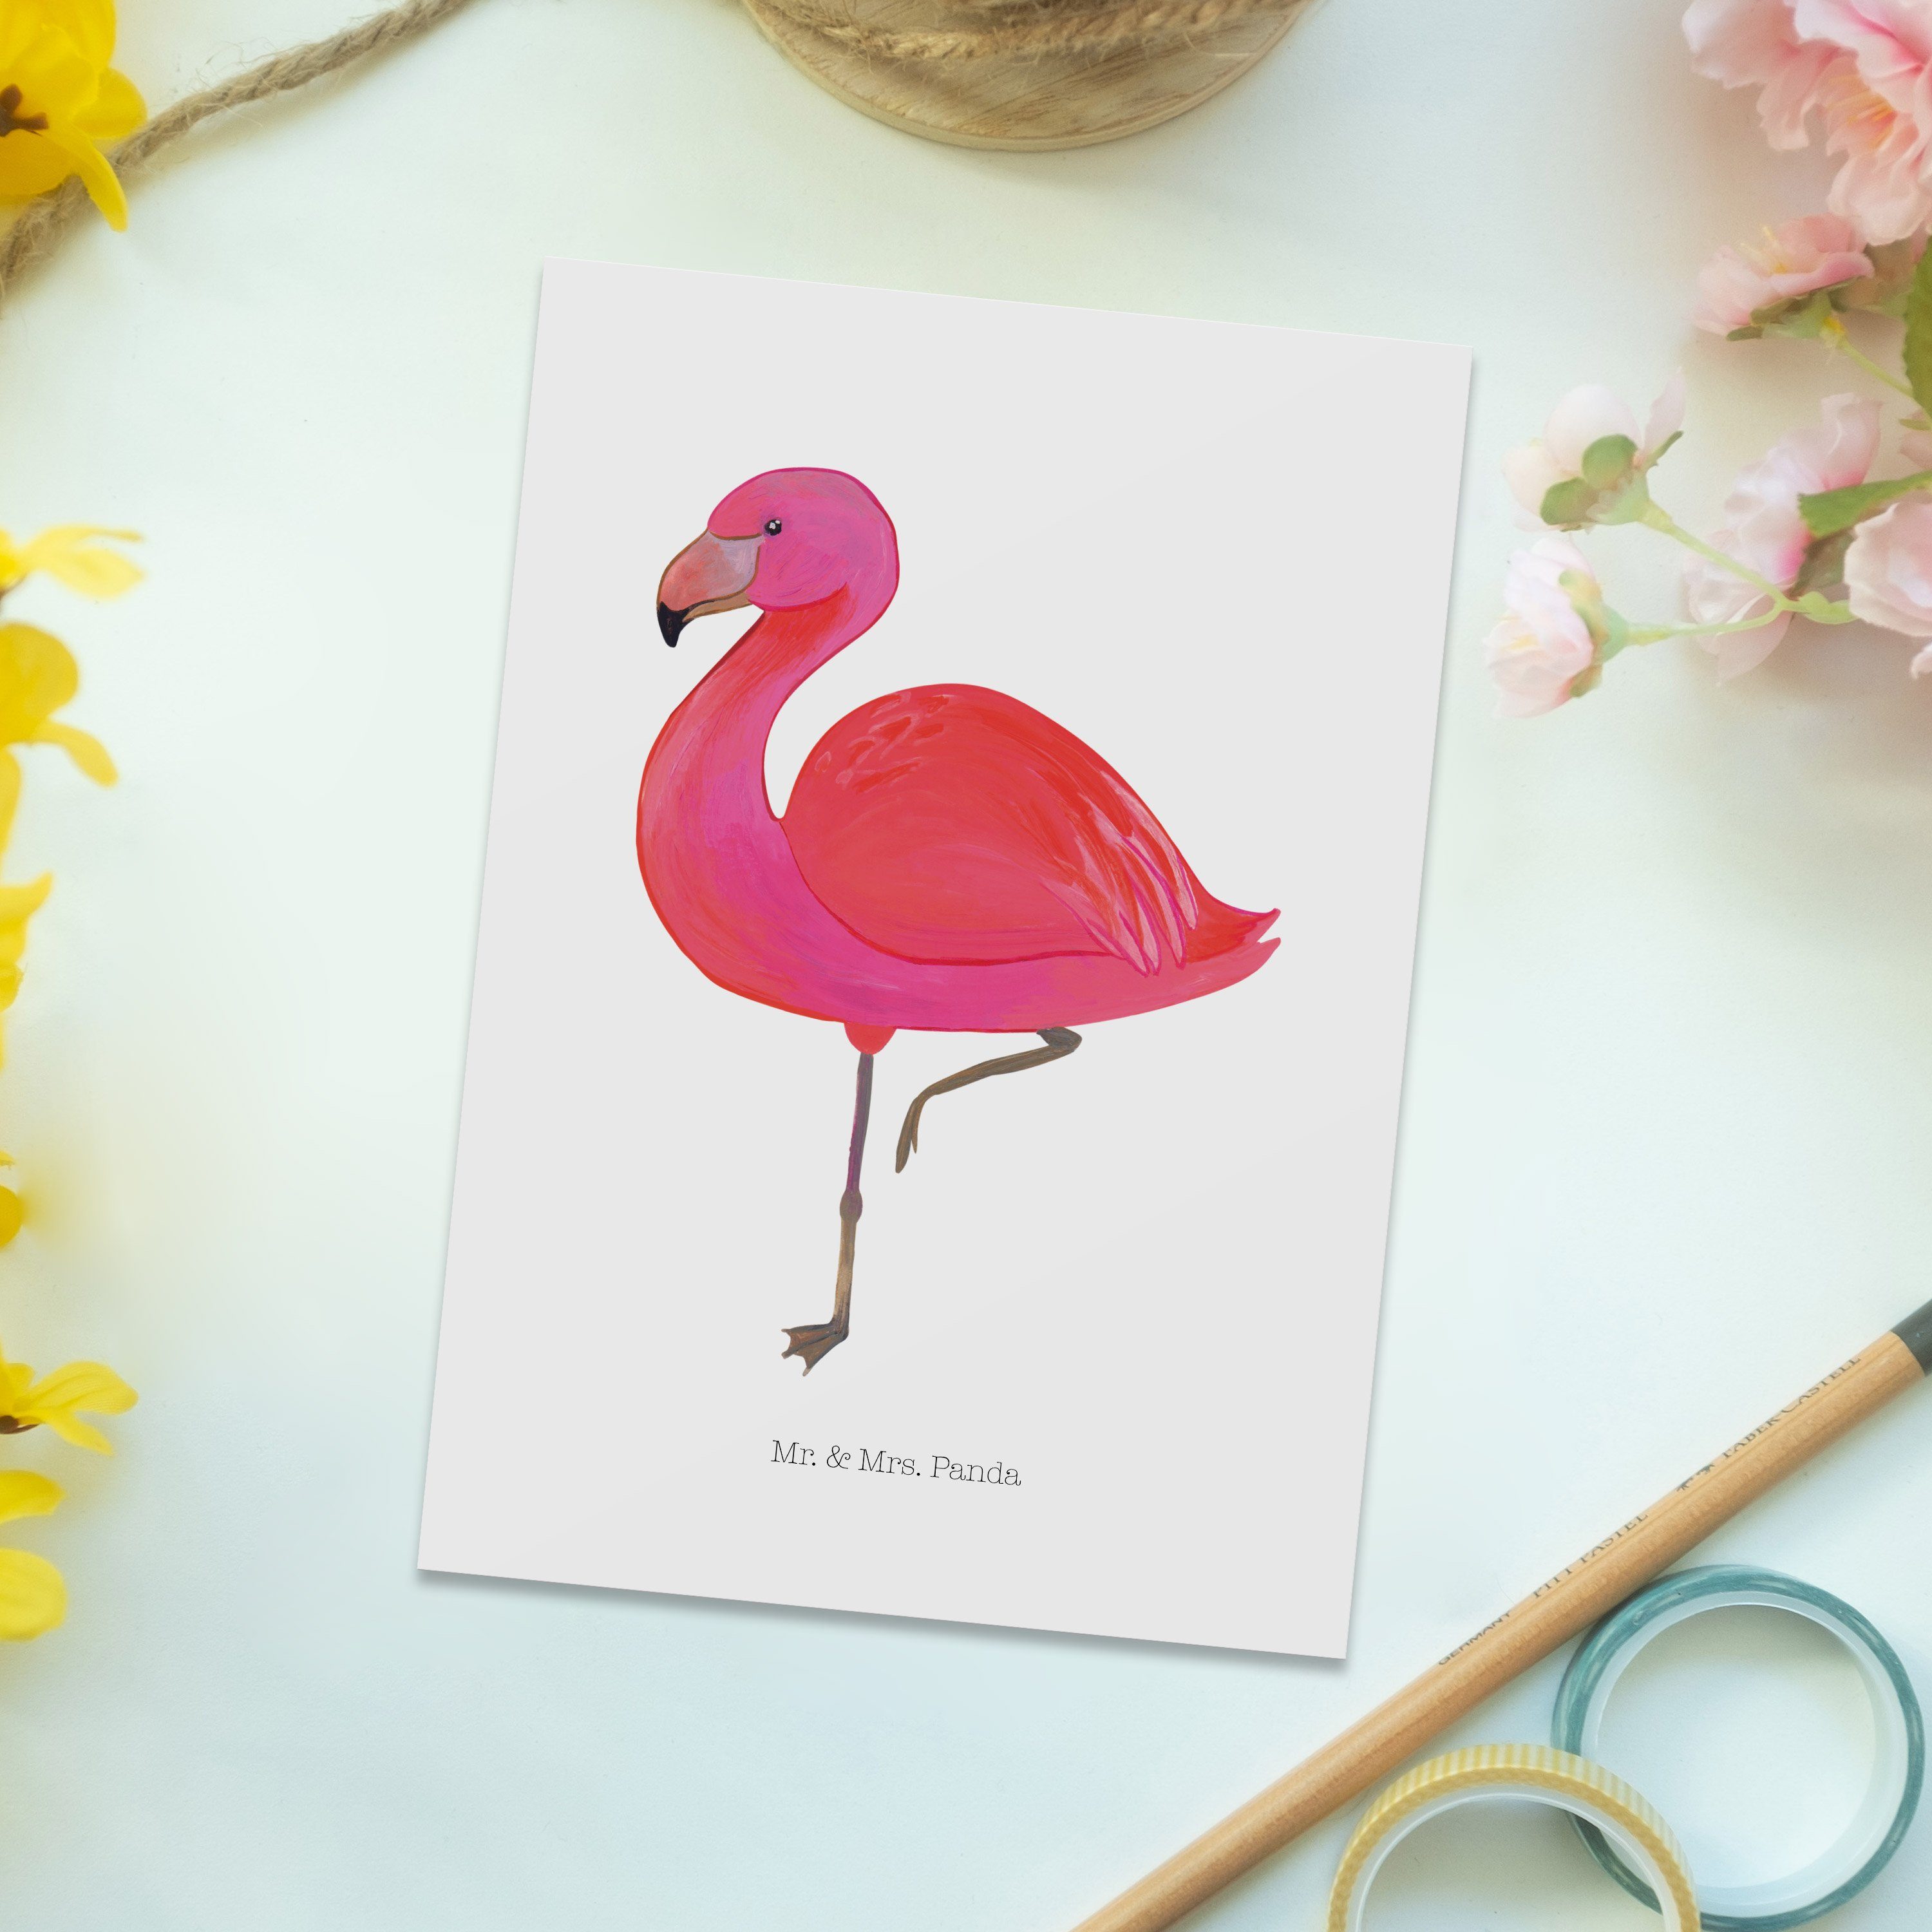 Freundinnen, classic Geschenkk - Einladung, Geschenk, Flamingo Weiß Postkarte Mr. Panda & Mrs. -